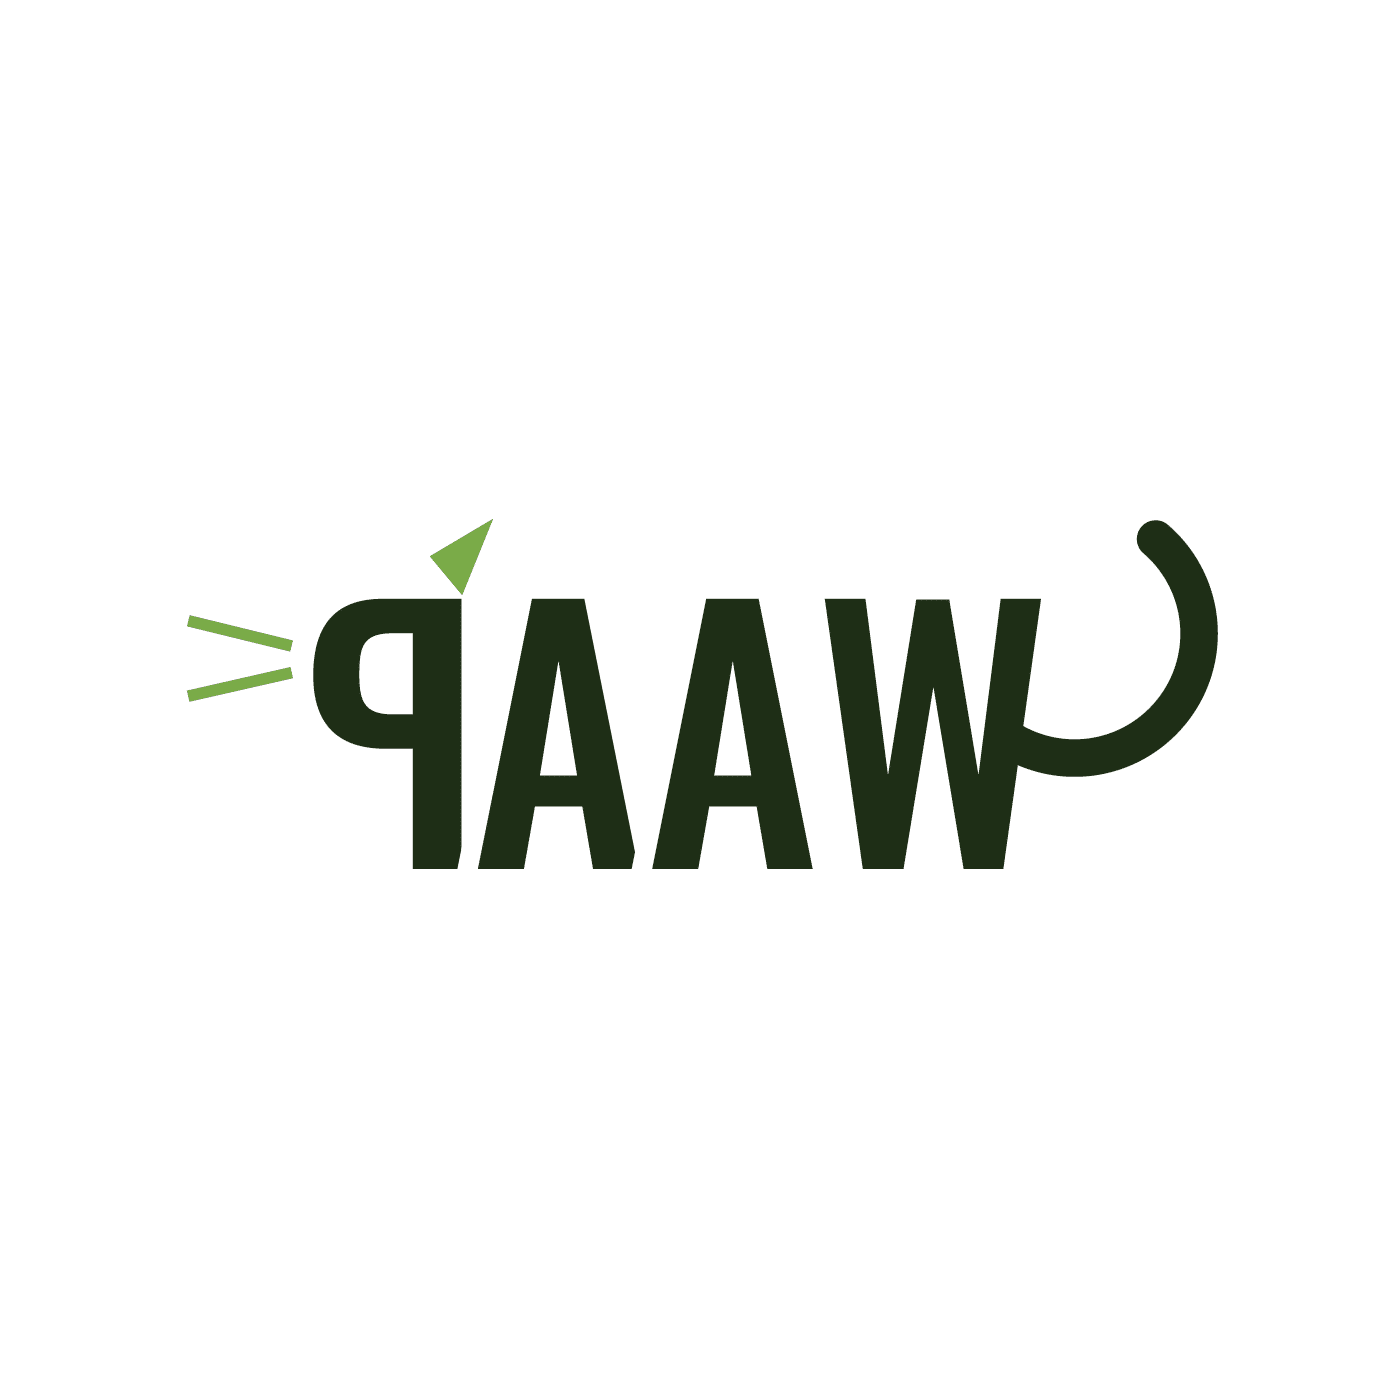 PAAW Logo Design